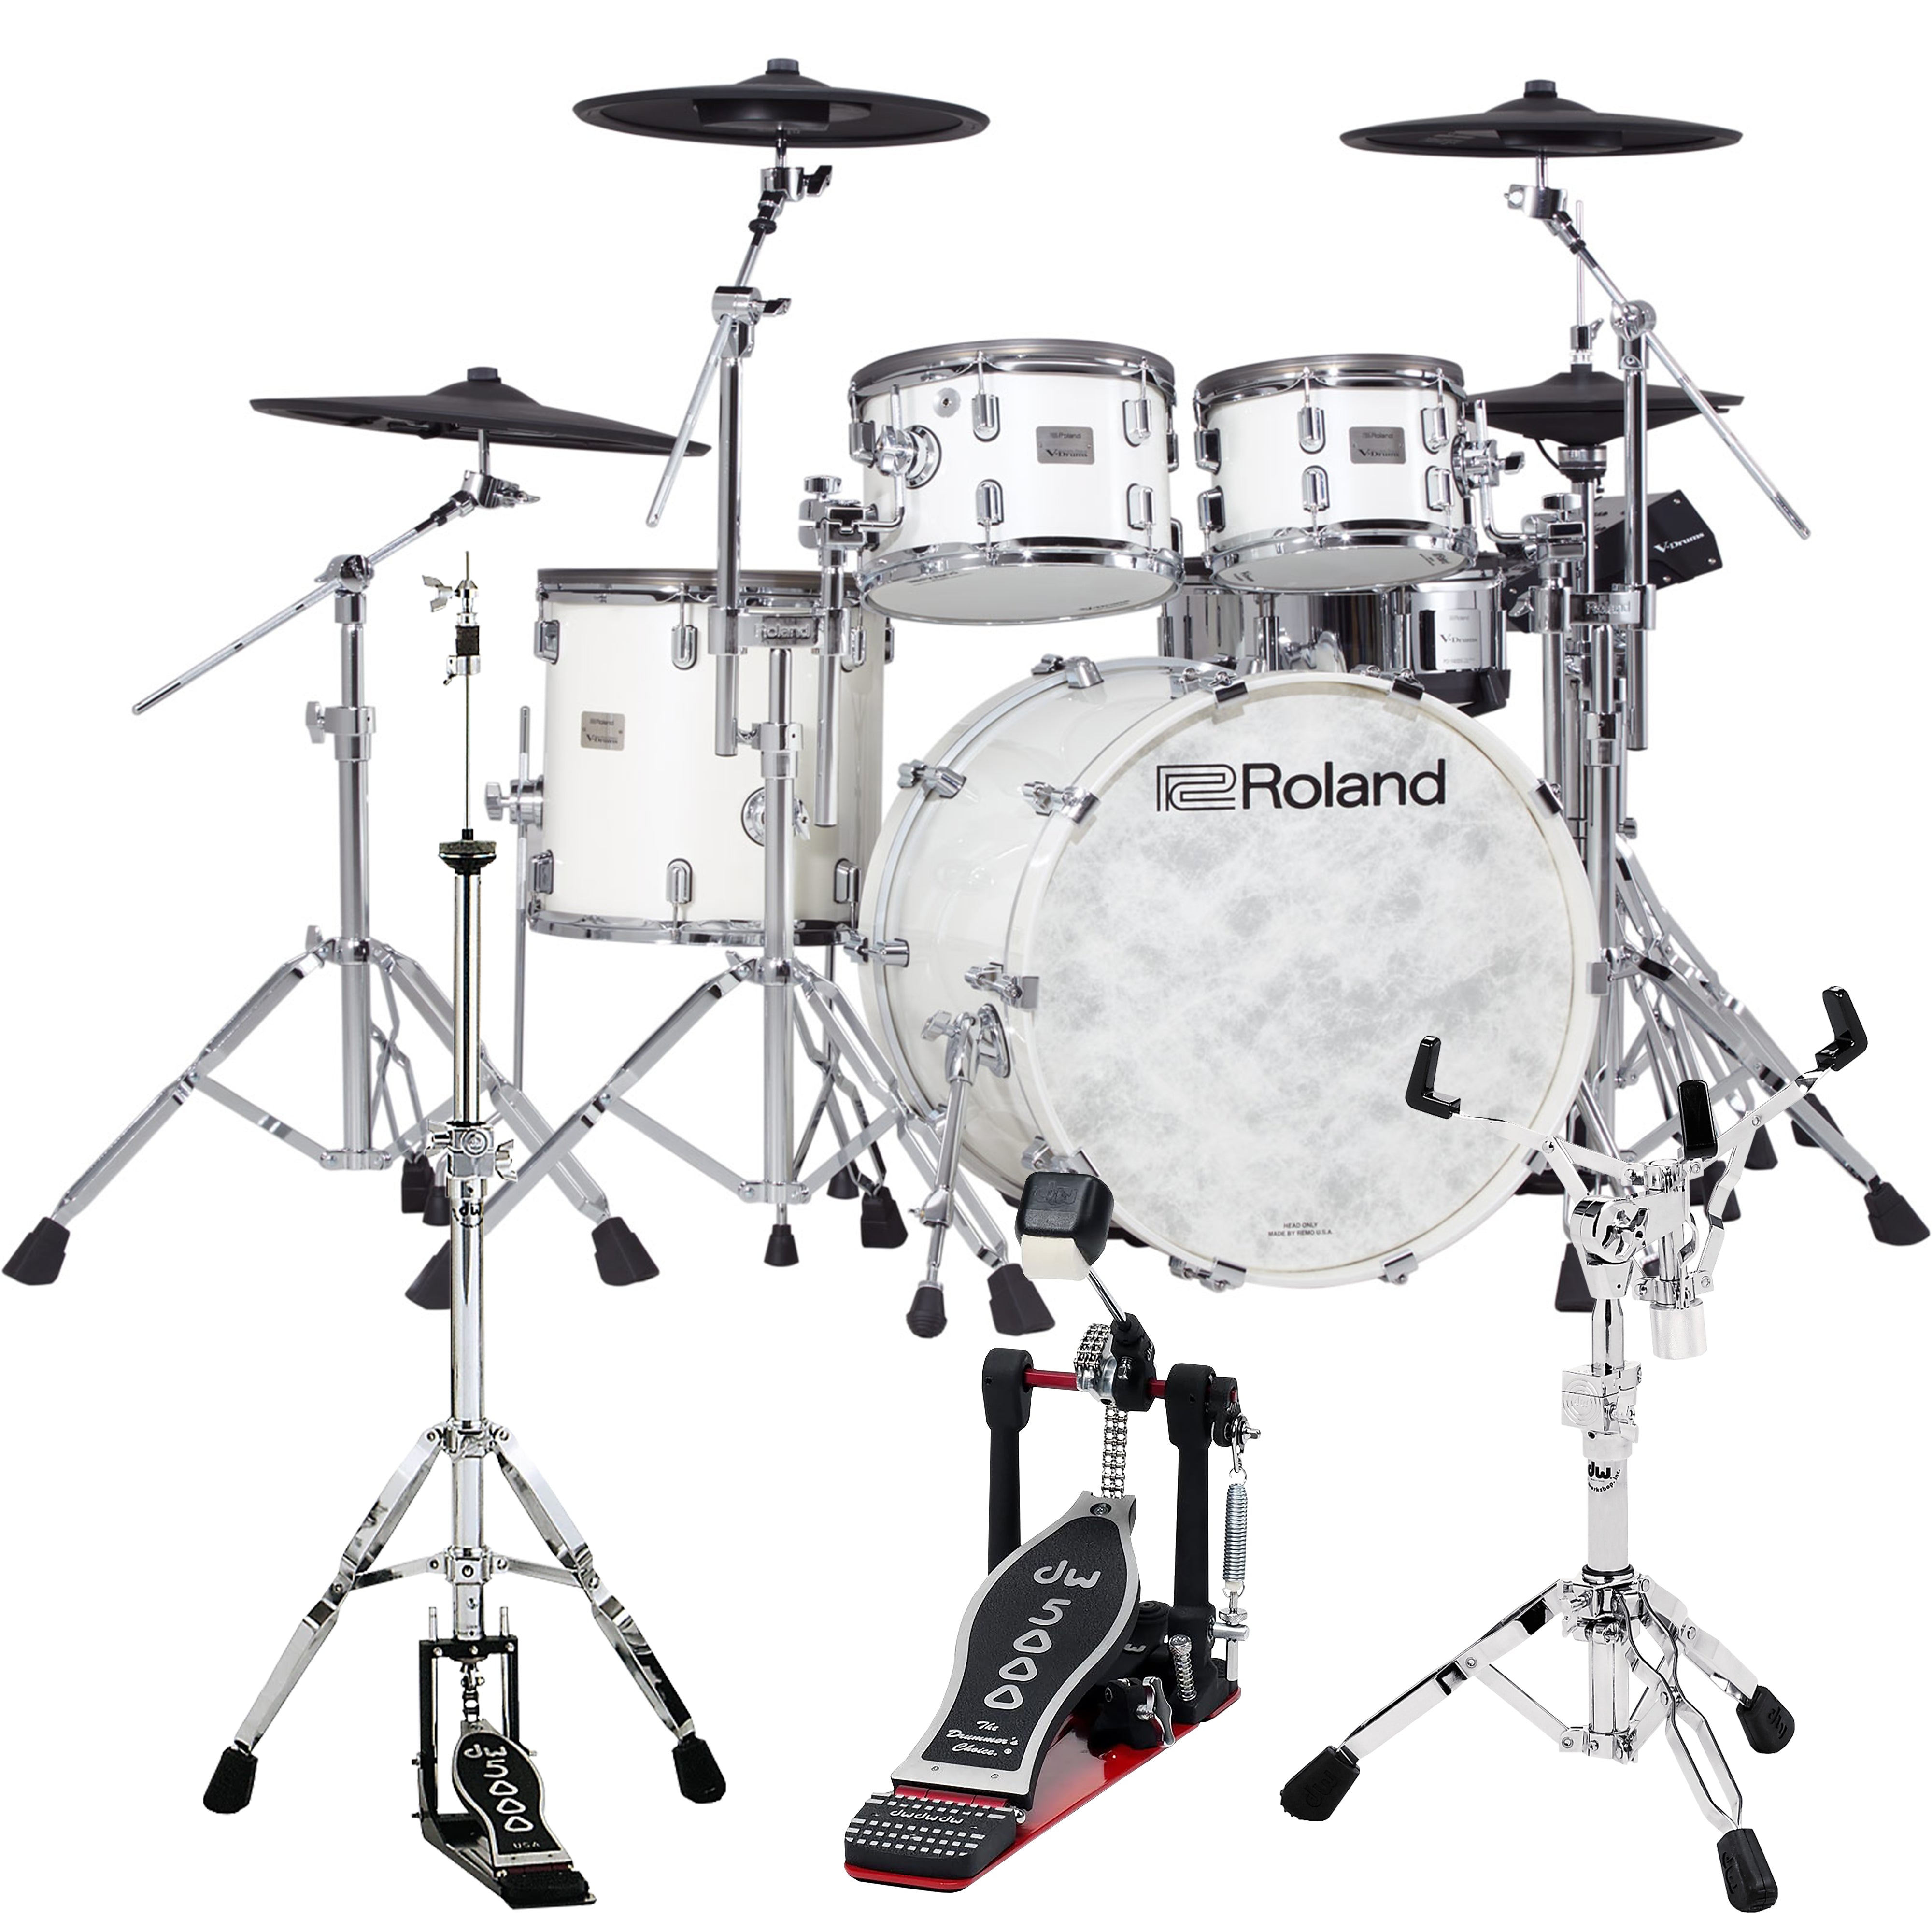 Roland VAD706 V-Drums Acoustic Design 5pc Kit - White COMPLETE DRUM BUNDLE